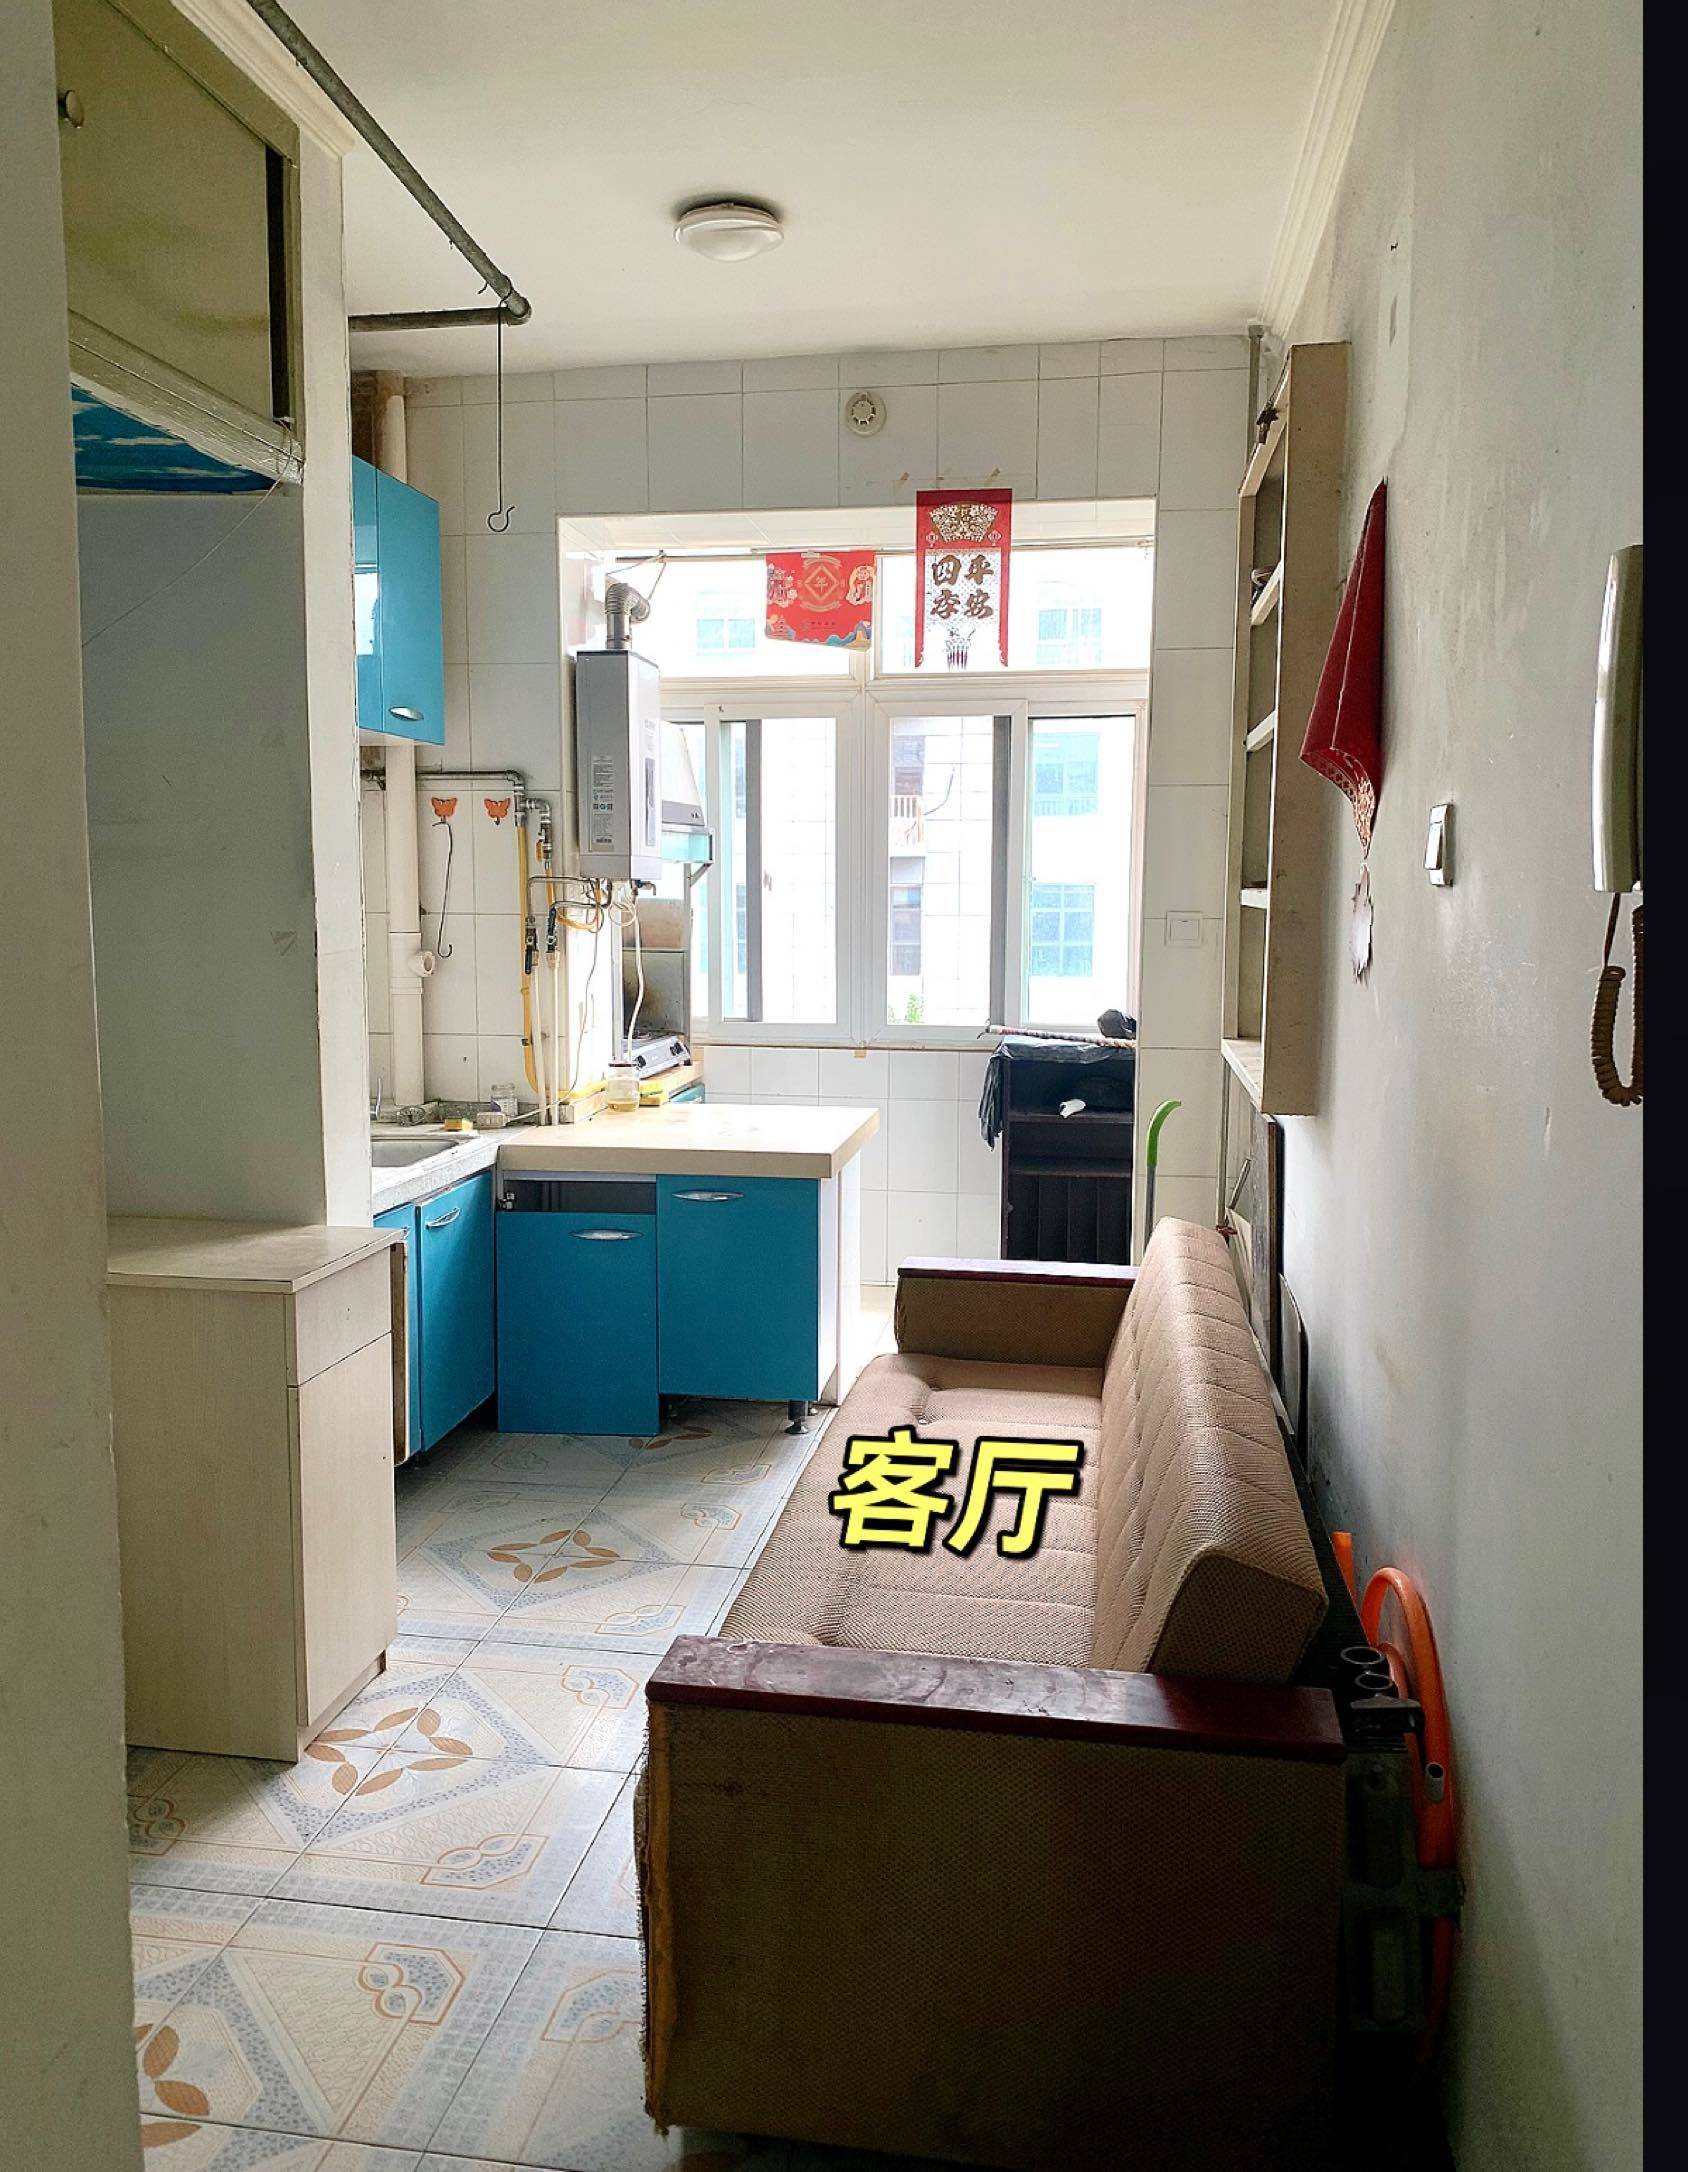 Beijing-Xicheng-Cozy Home,Clean&Comfy,No Gender Limit,Hustle & Bustle,Chilled